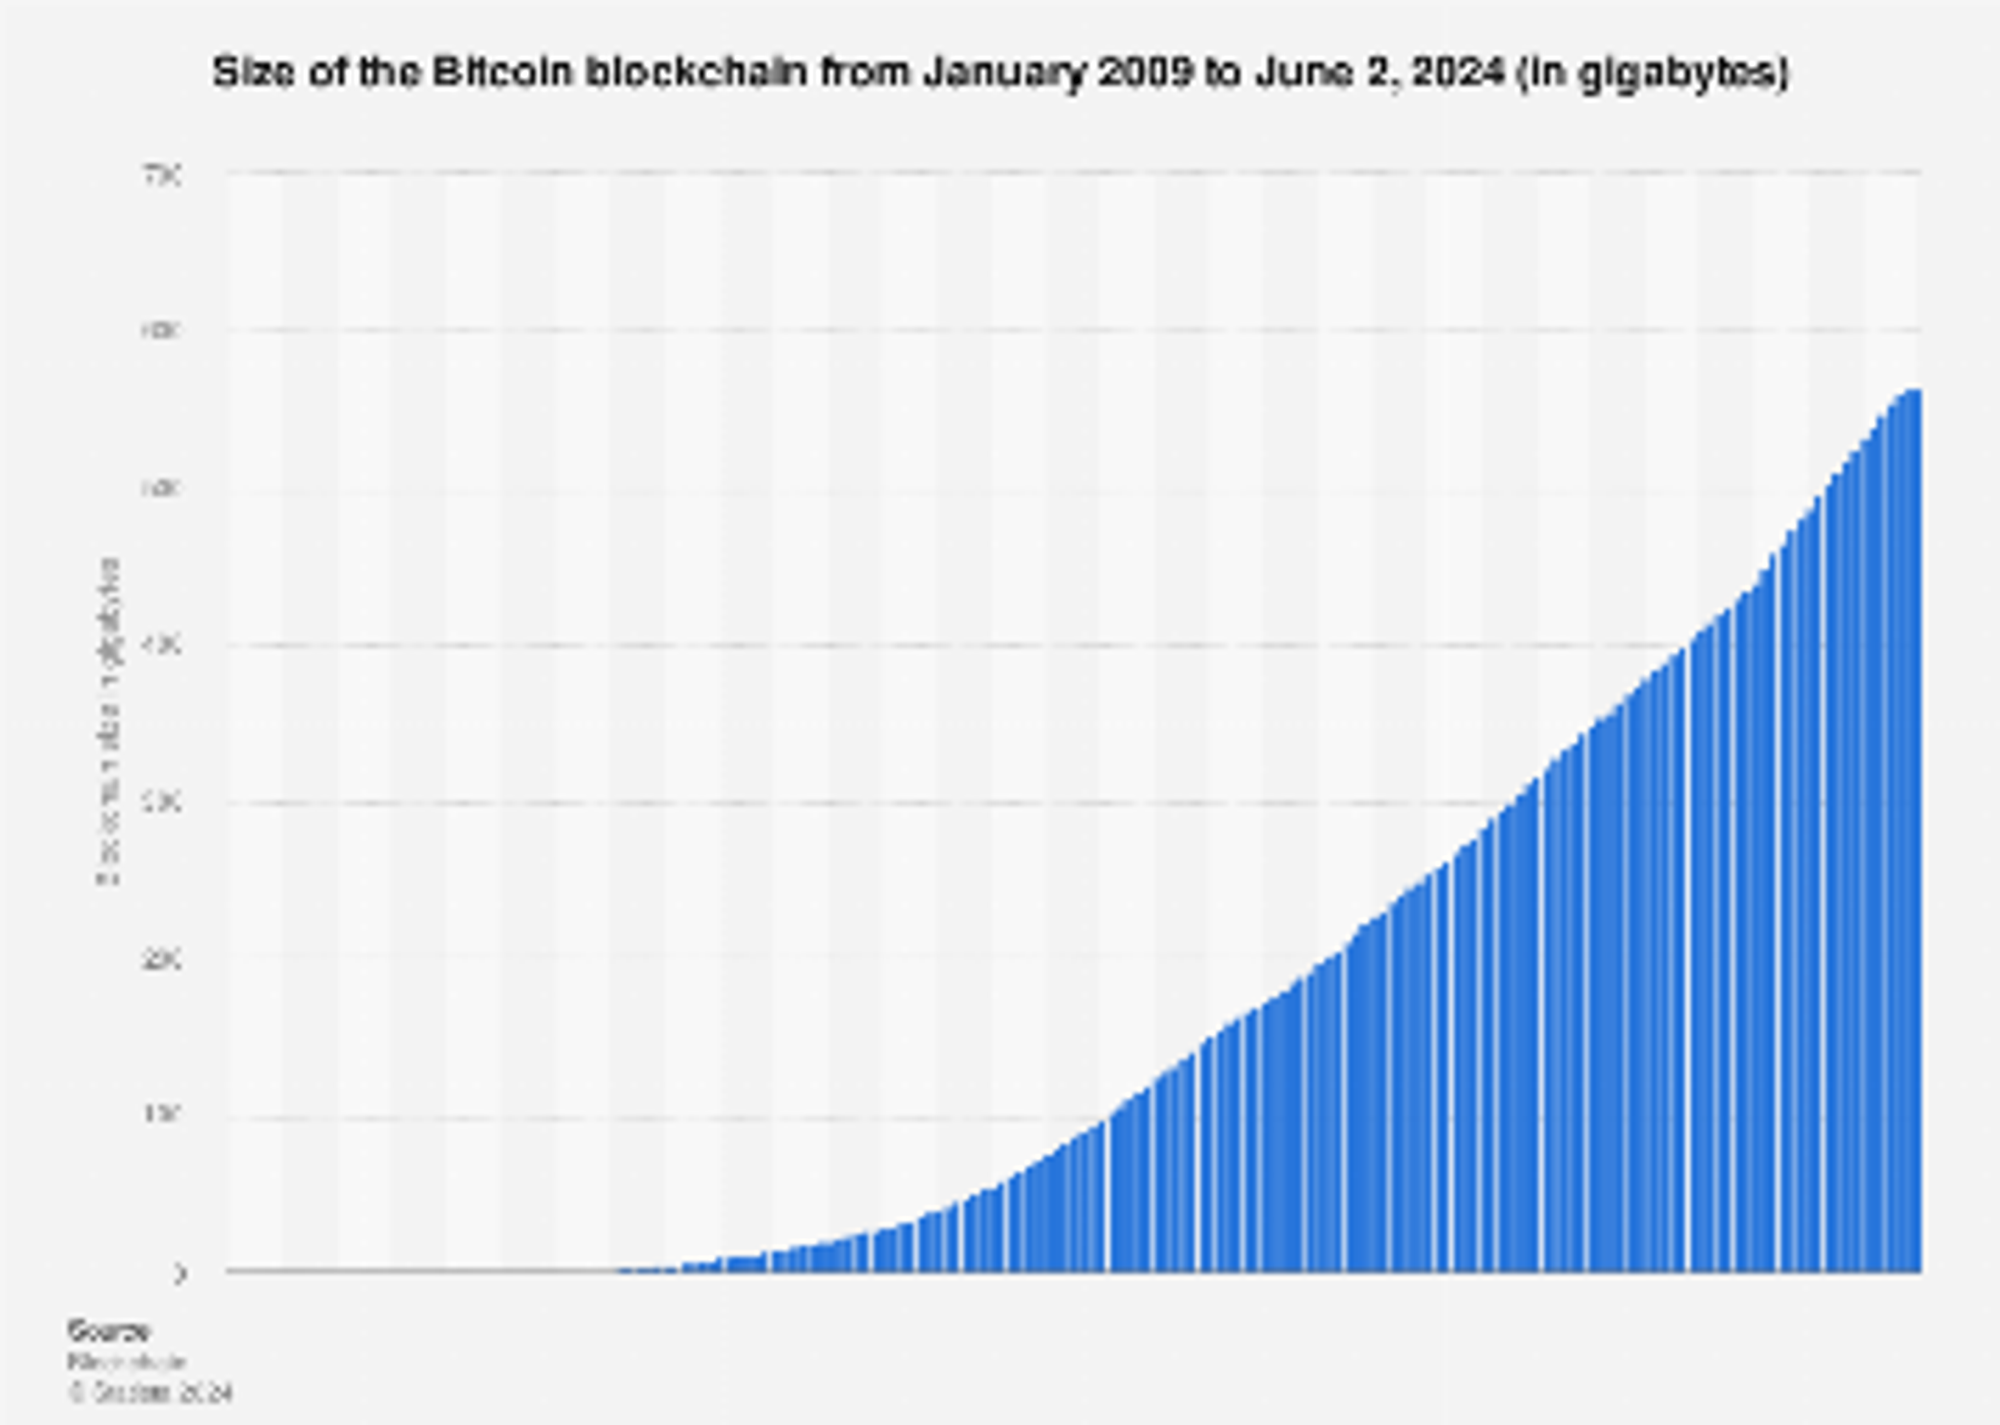 Bitcoin blockchain size 2009-2020 | Statista